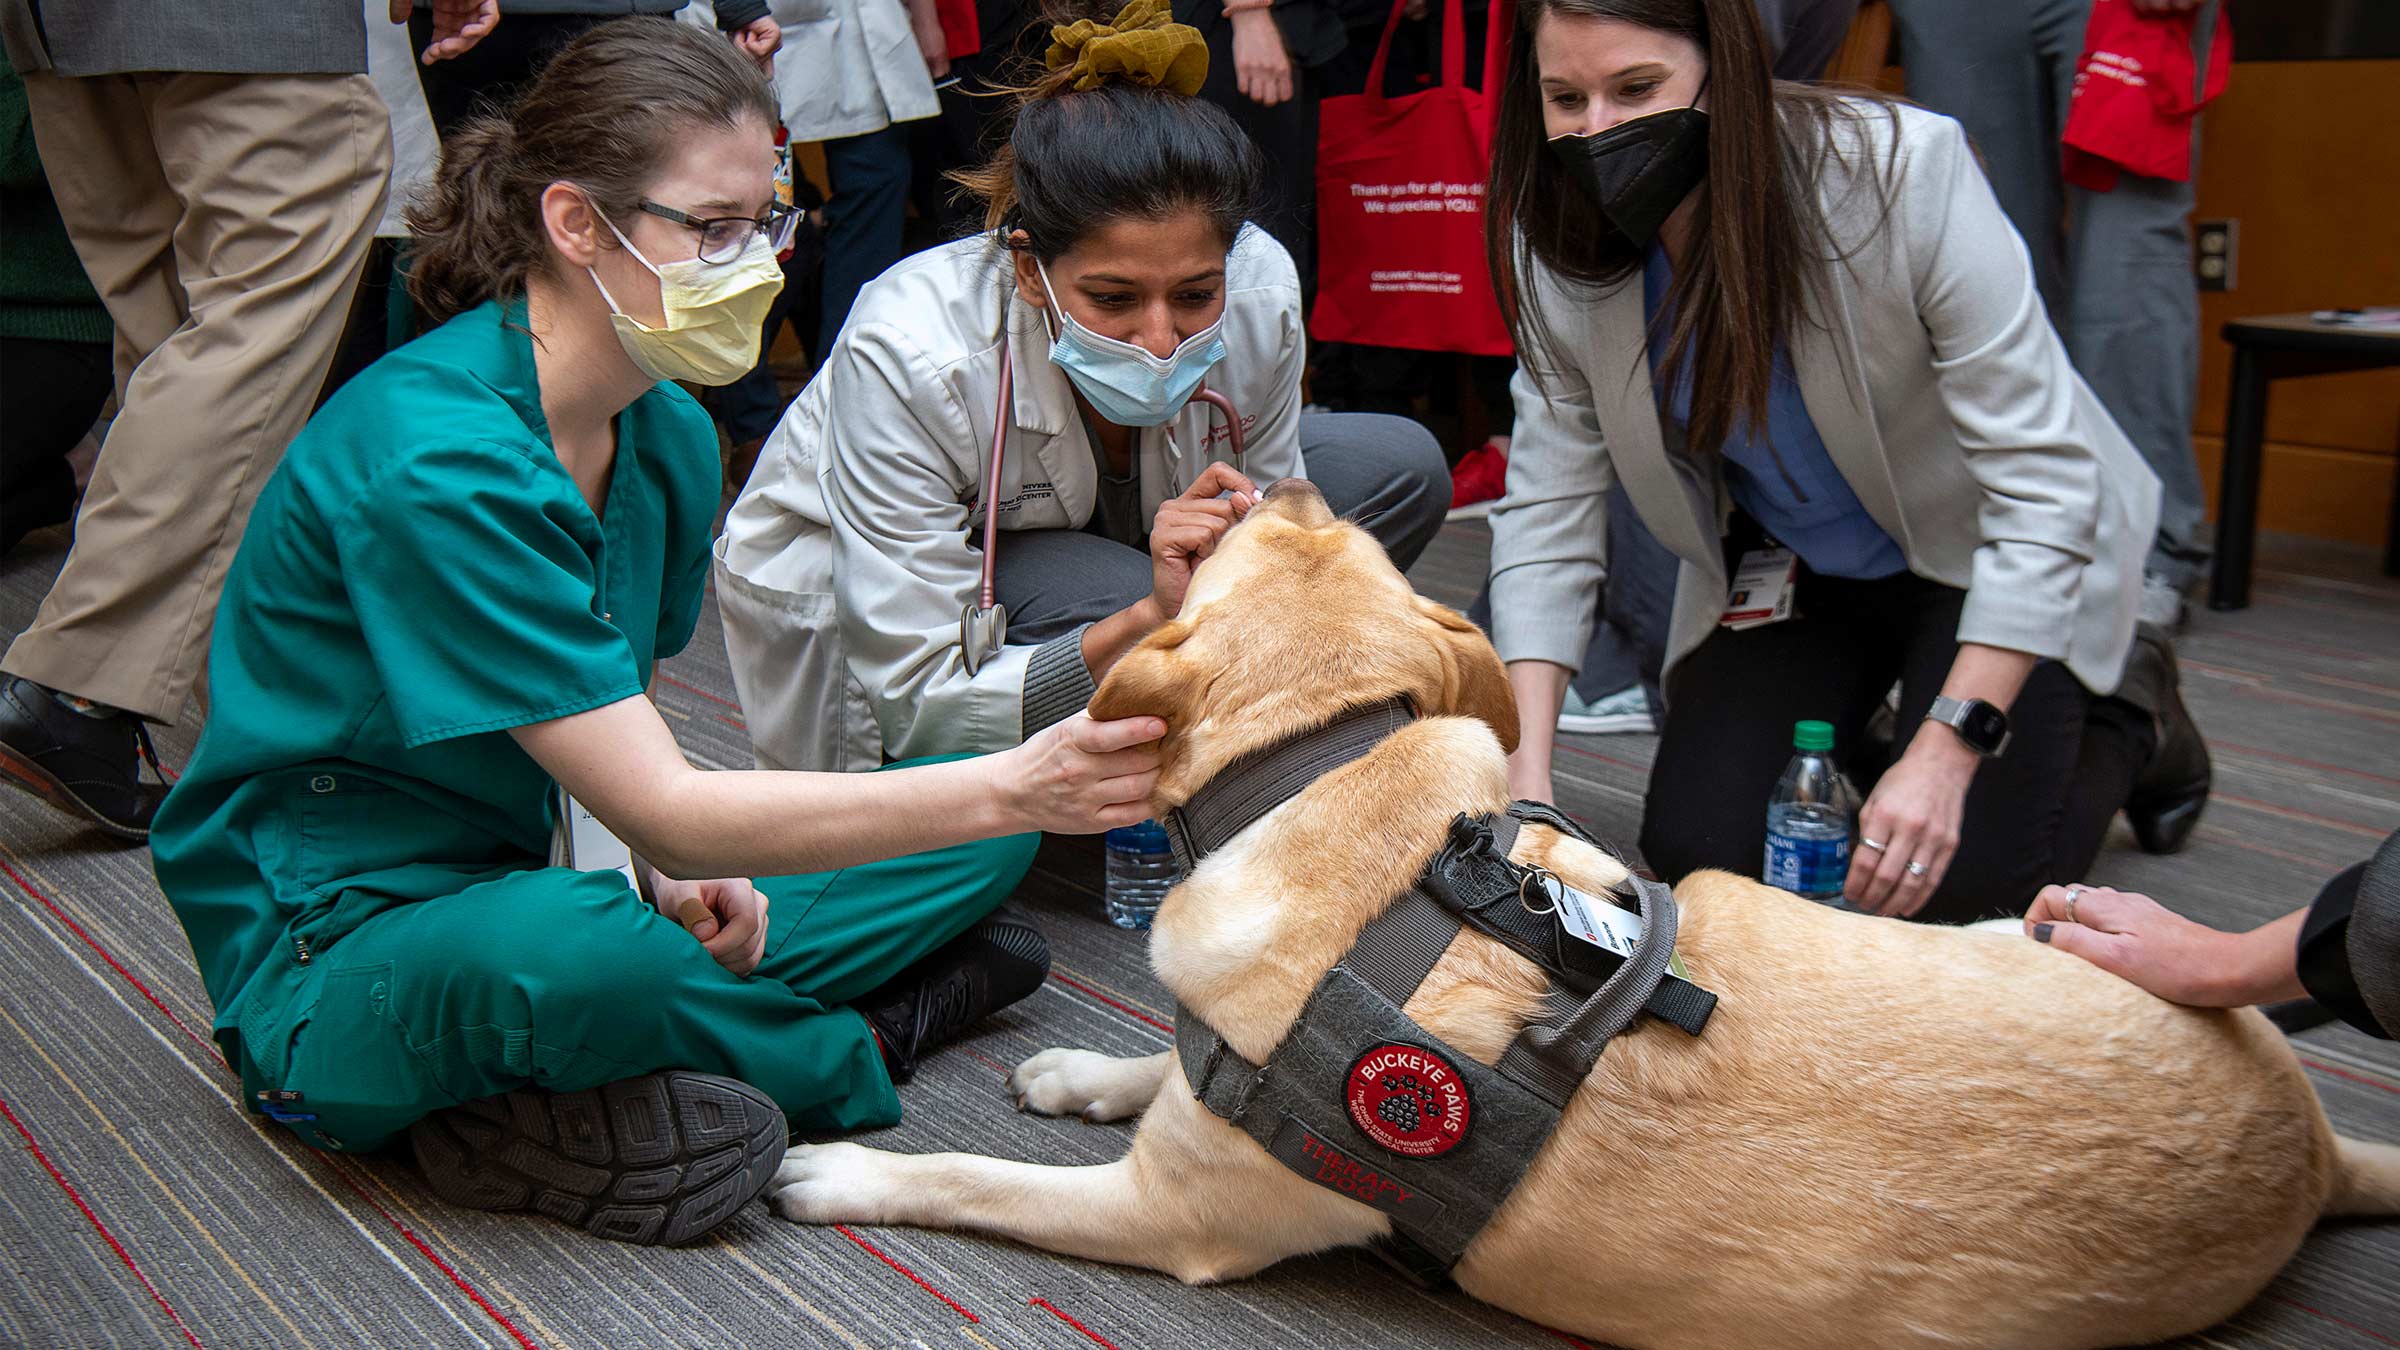 Priya Varma, MD and a group of health care workers with a Buckeye Paws dog